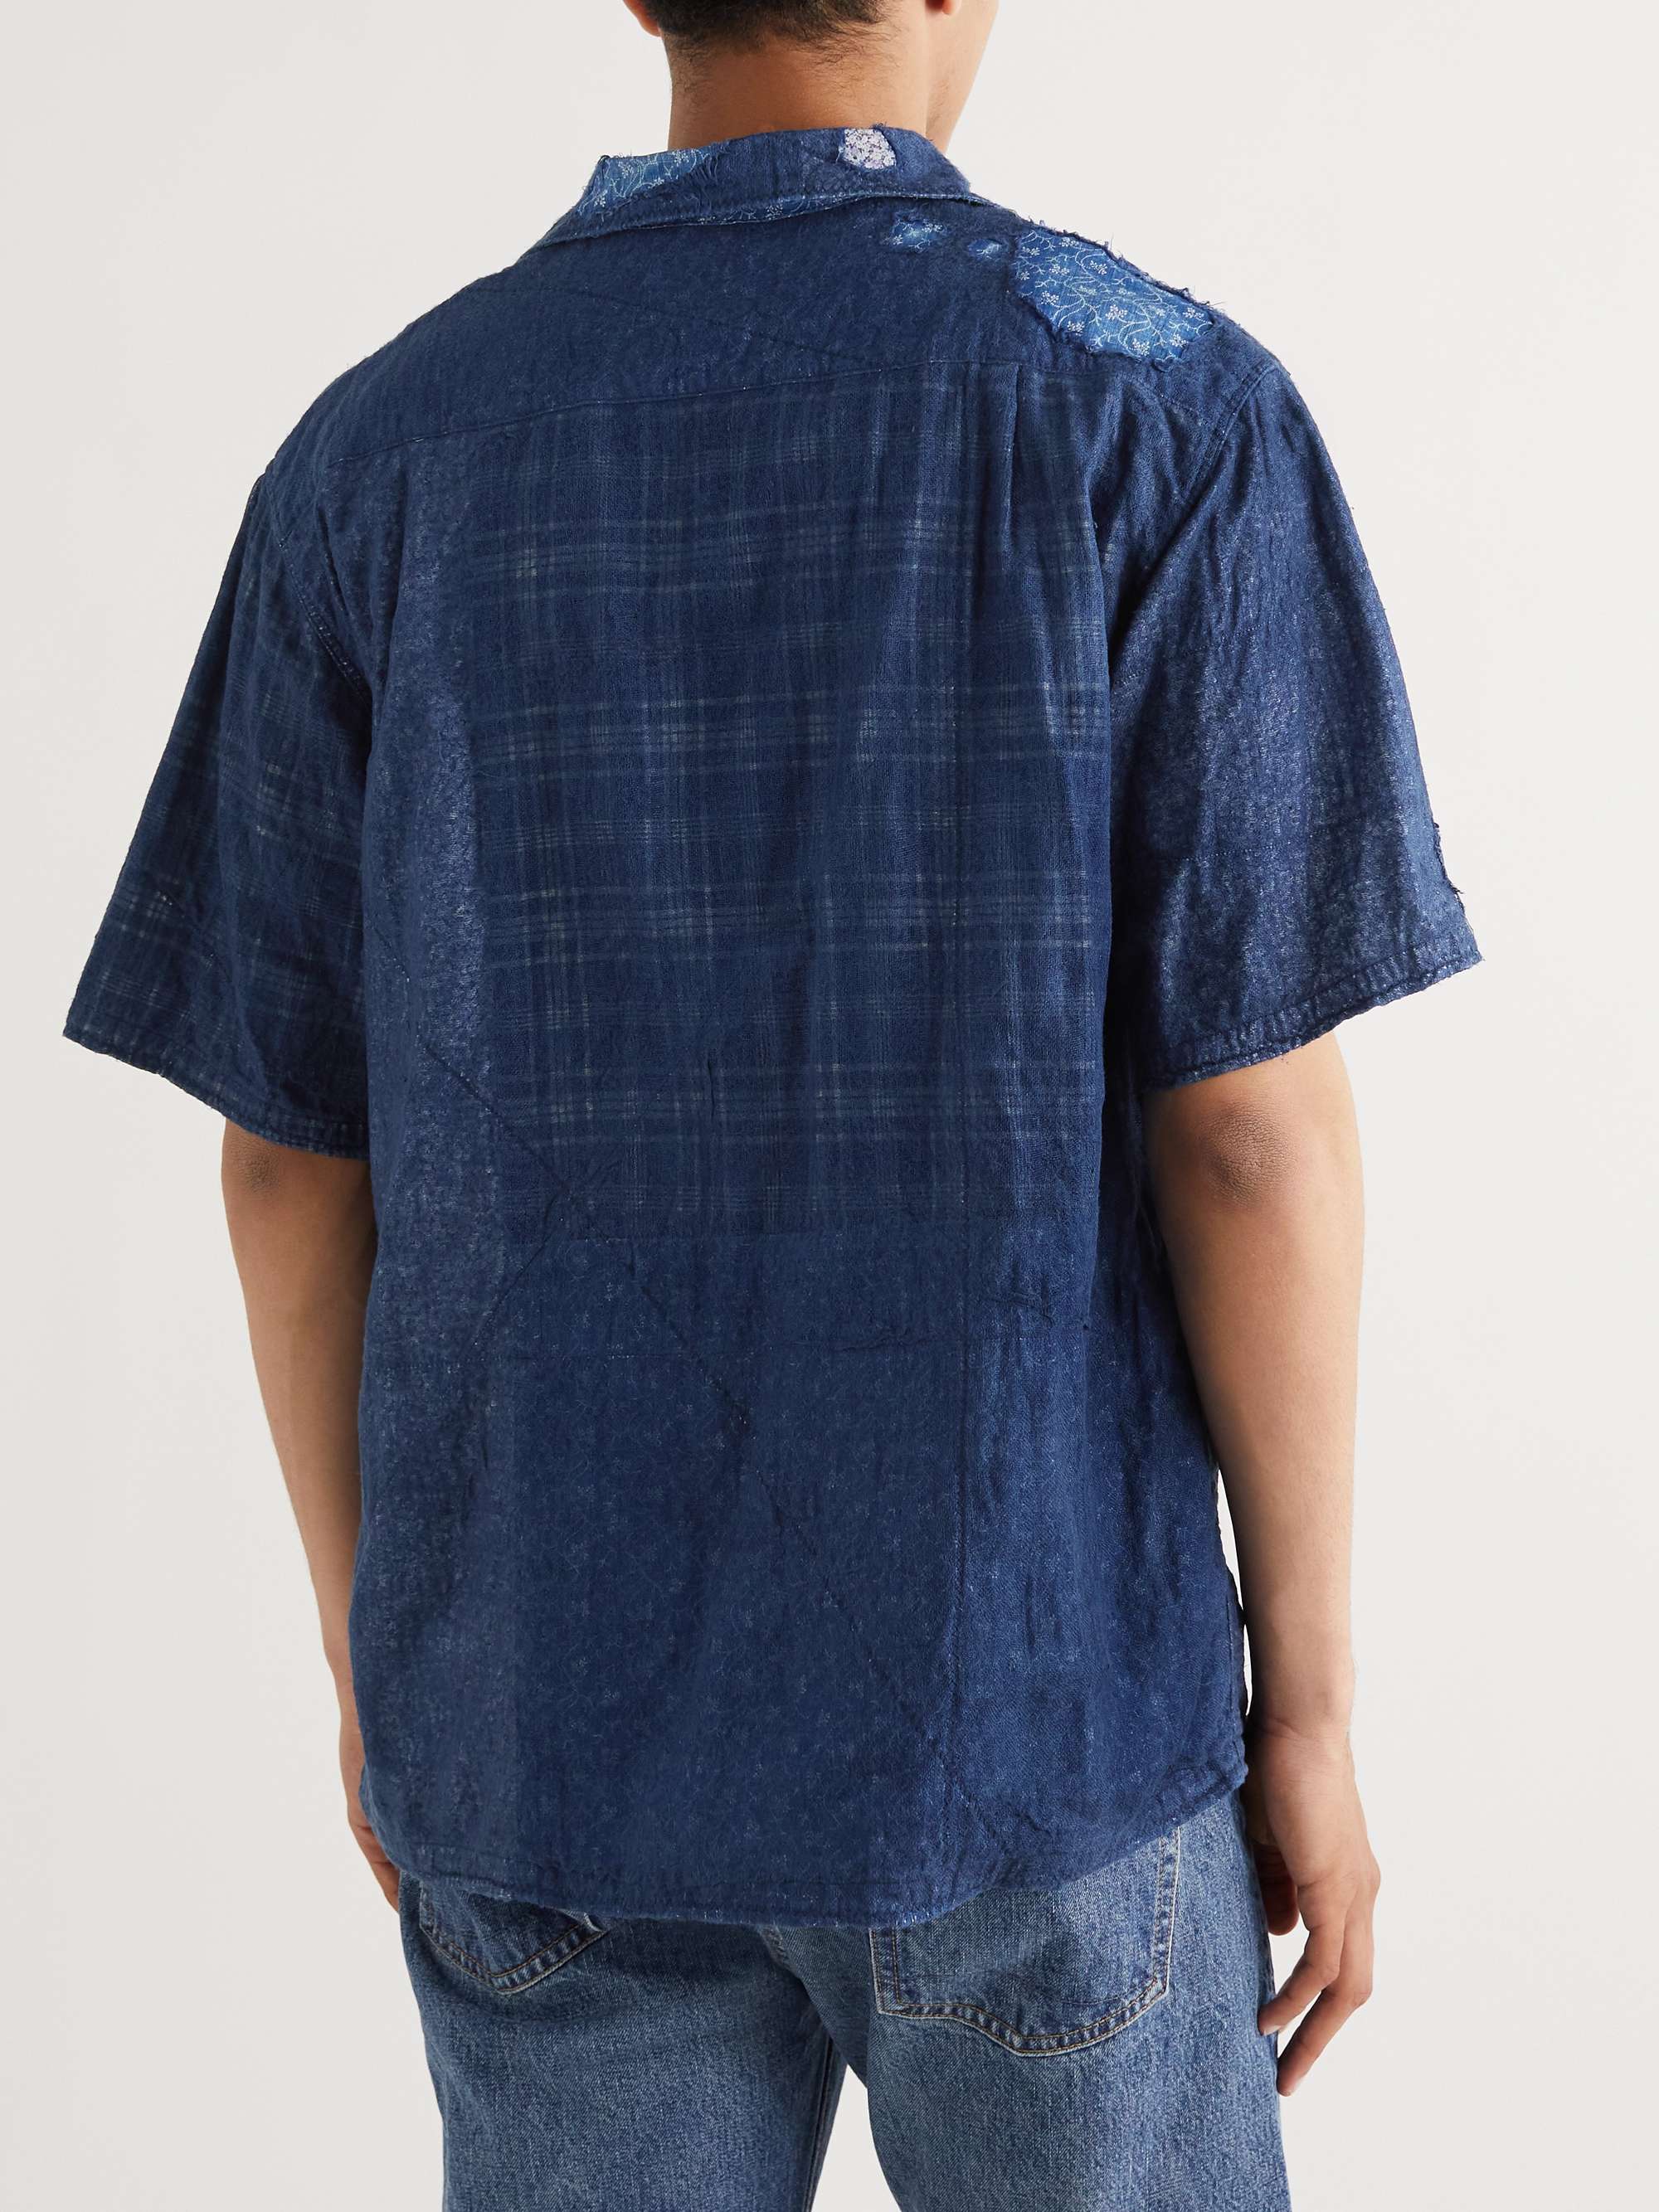 KAPITAL Kaya Boro Distressed Patchwork Linen and Cotton-Blend Shirt